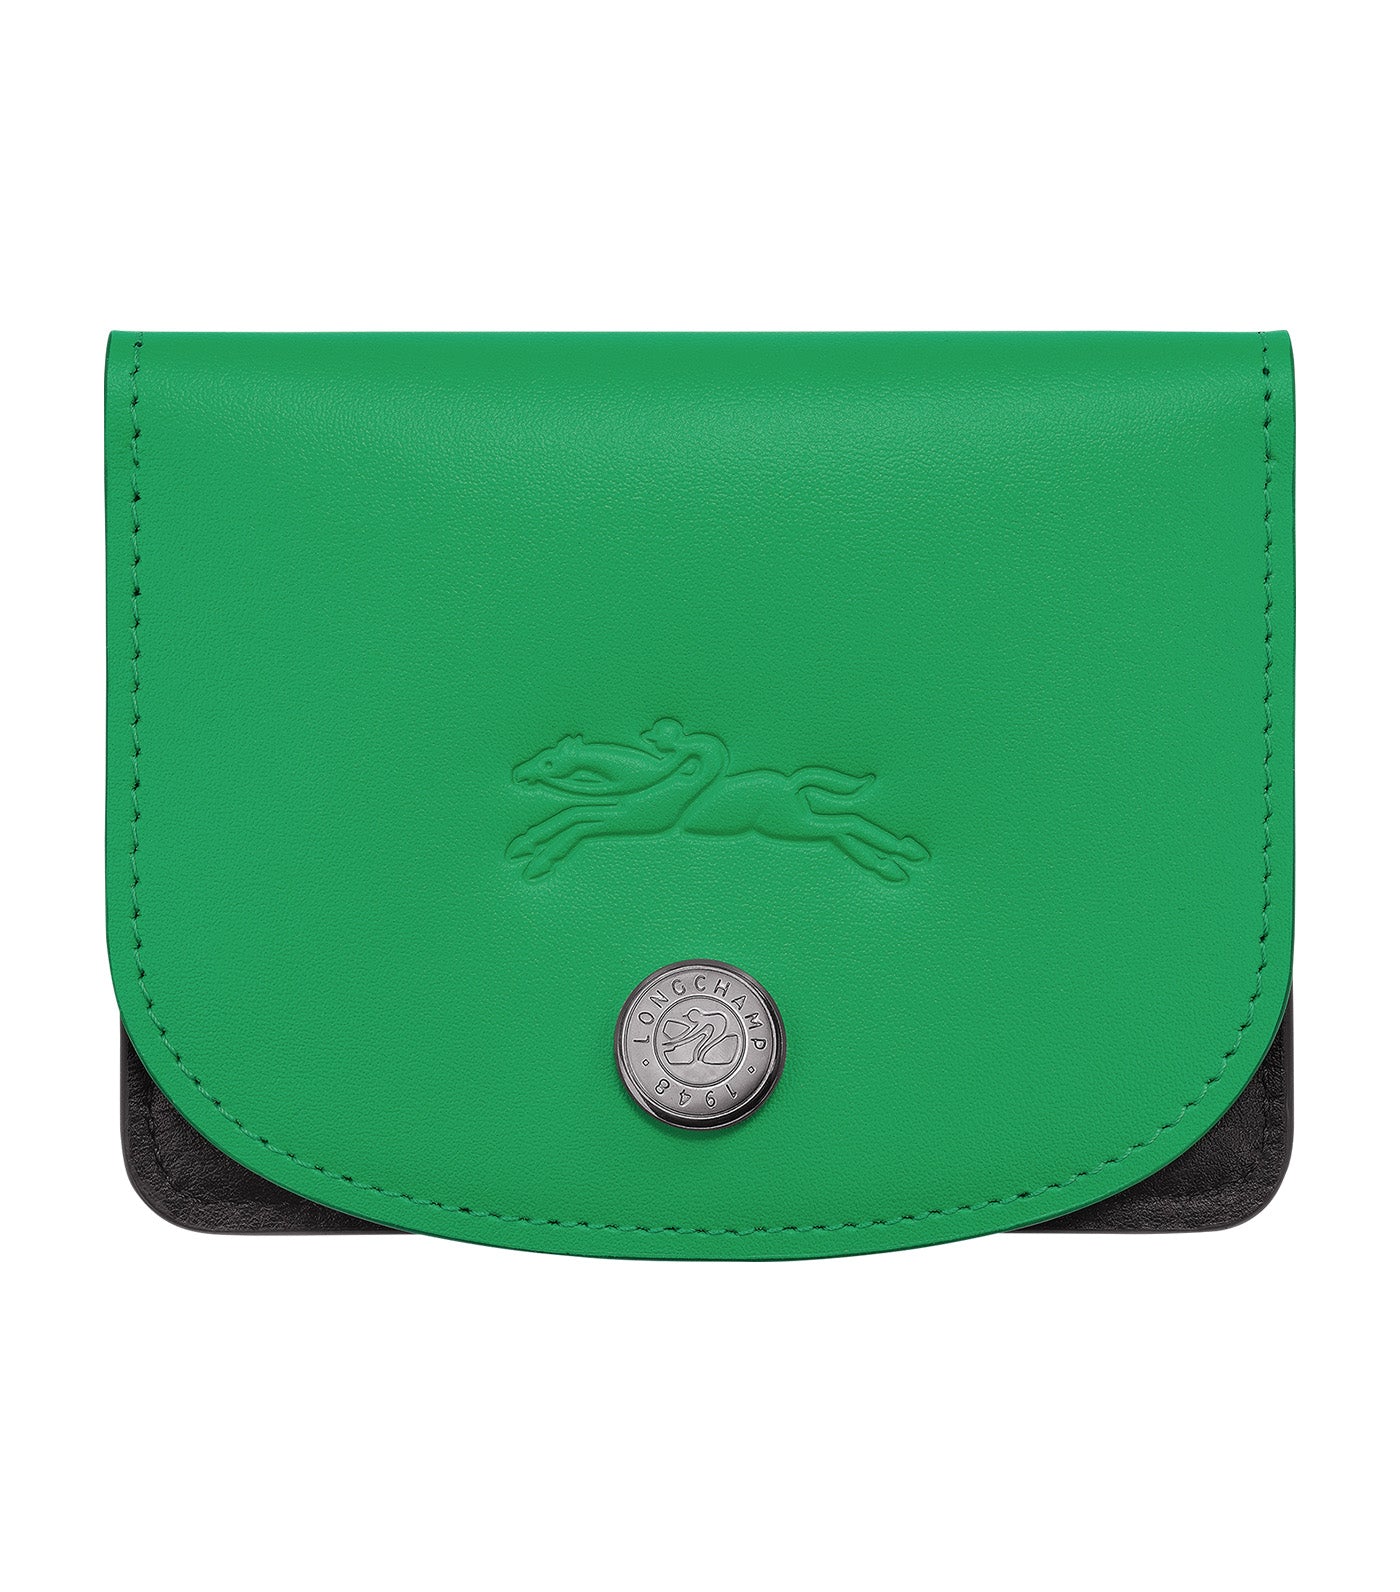 Le Pliage Xtra Cardholder Green